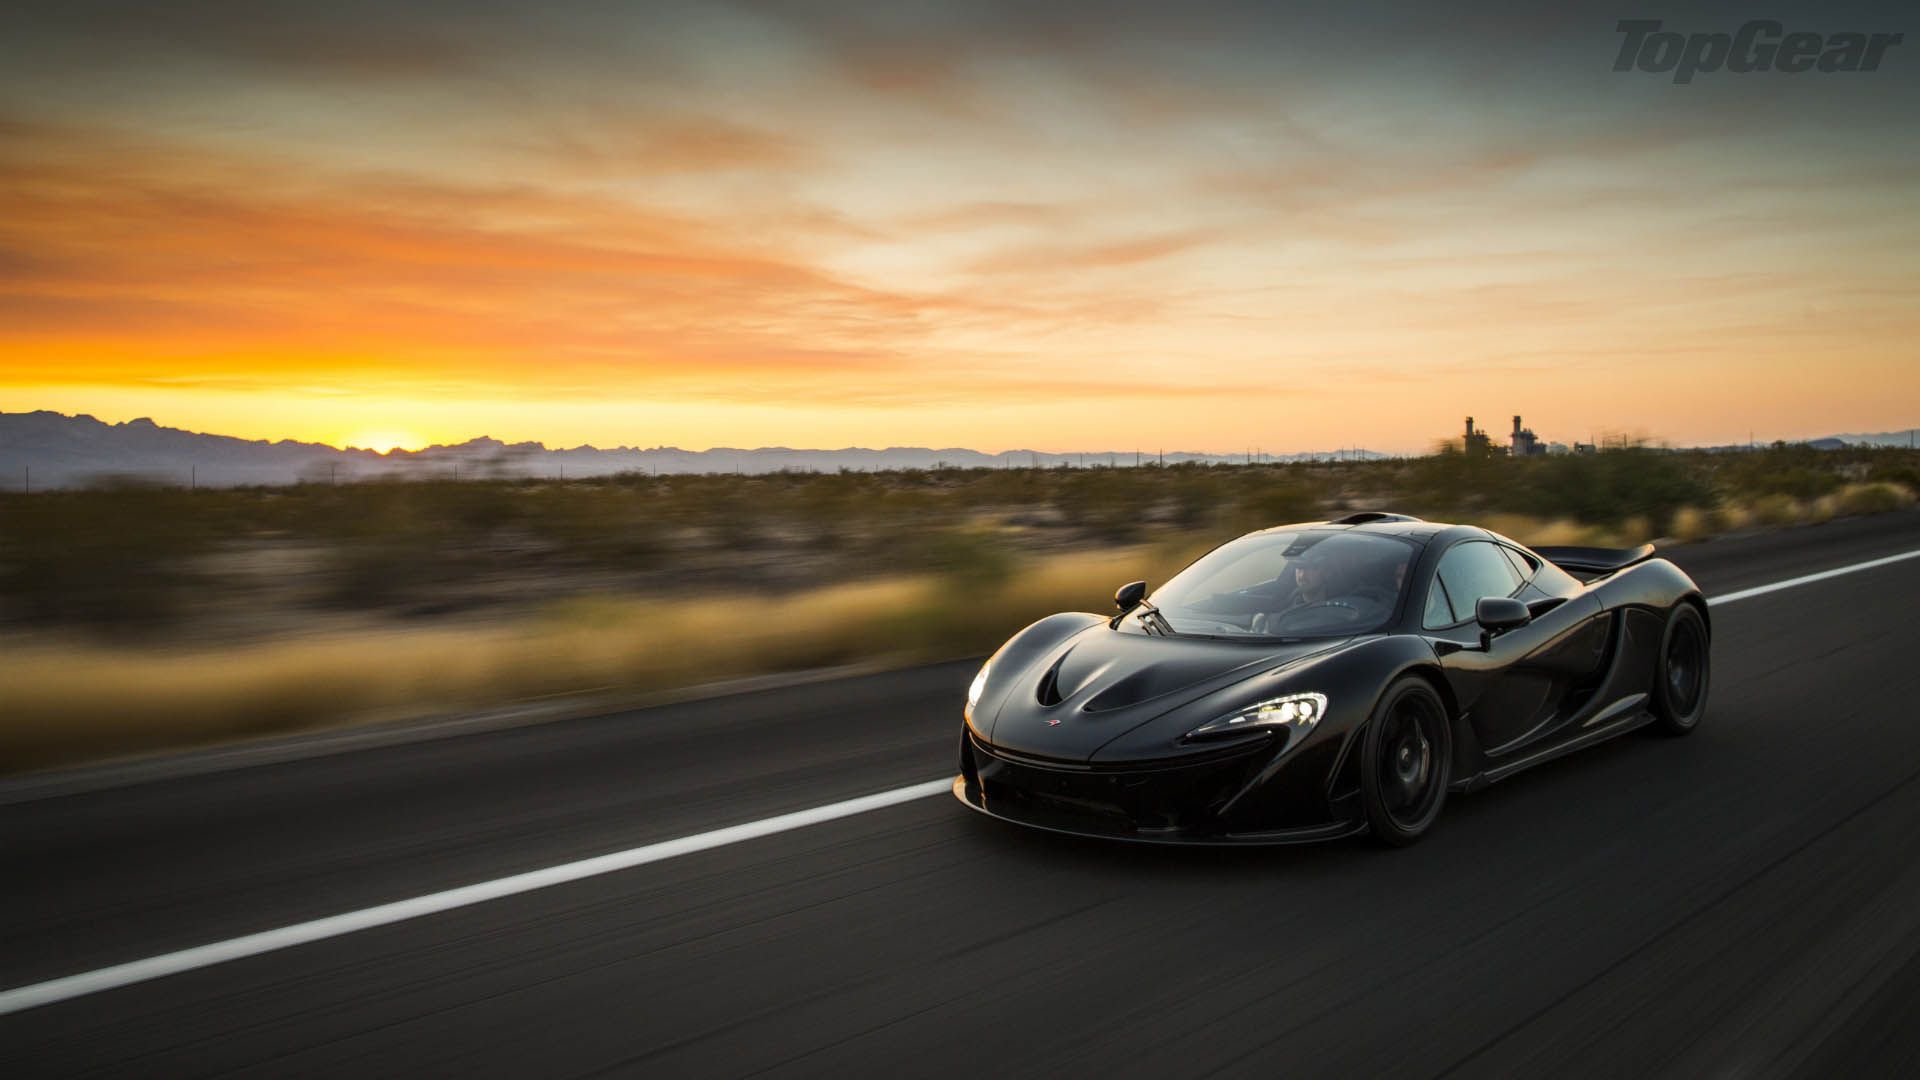 Top Gear Supercar: Black McLaren P1 at Sunrise